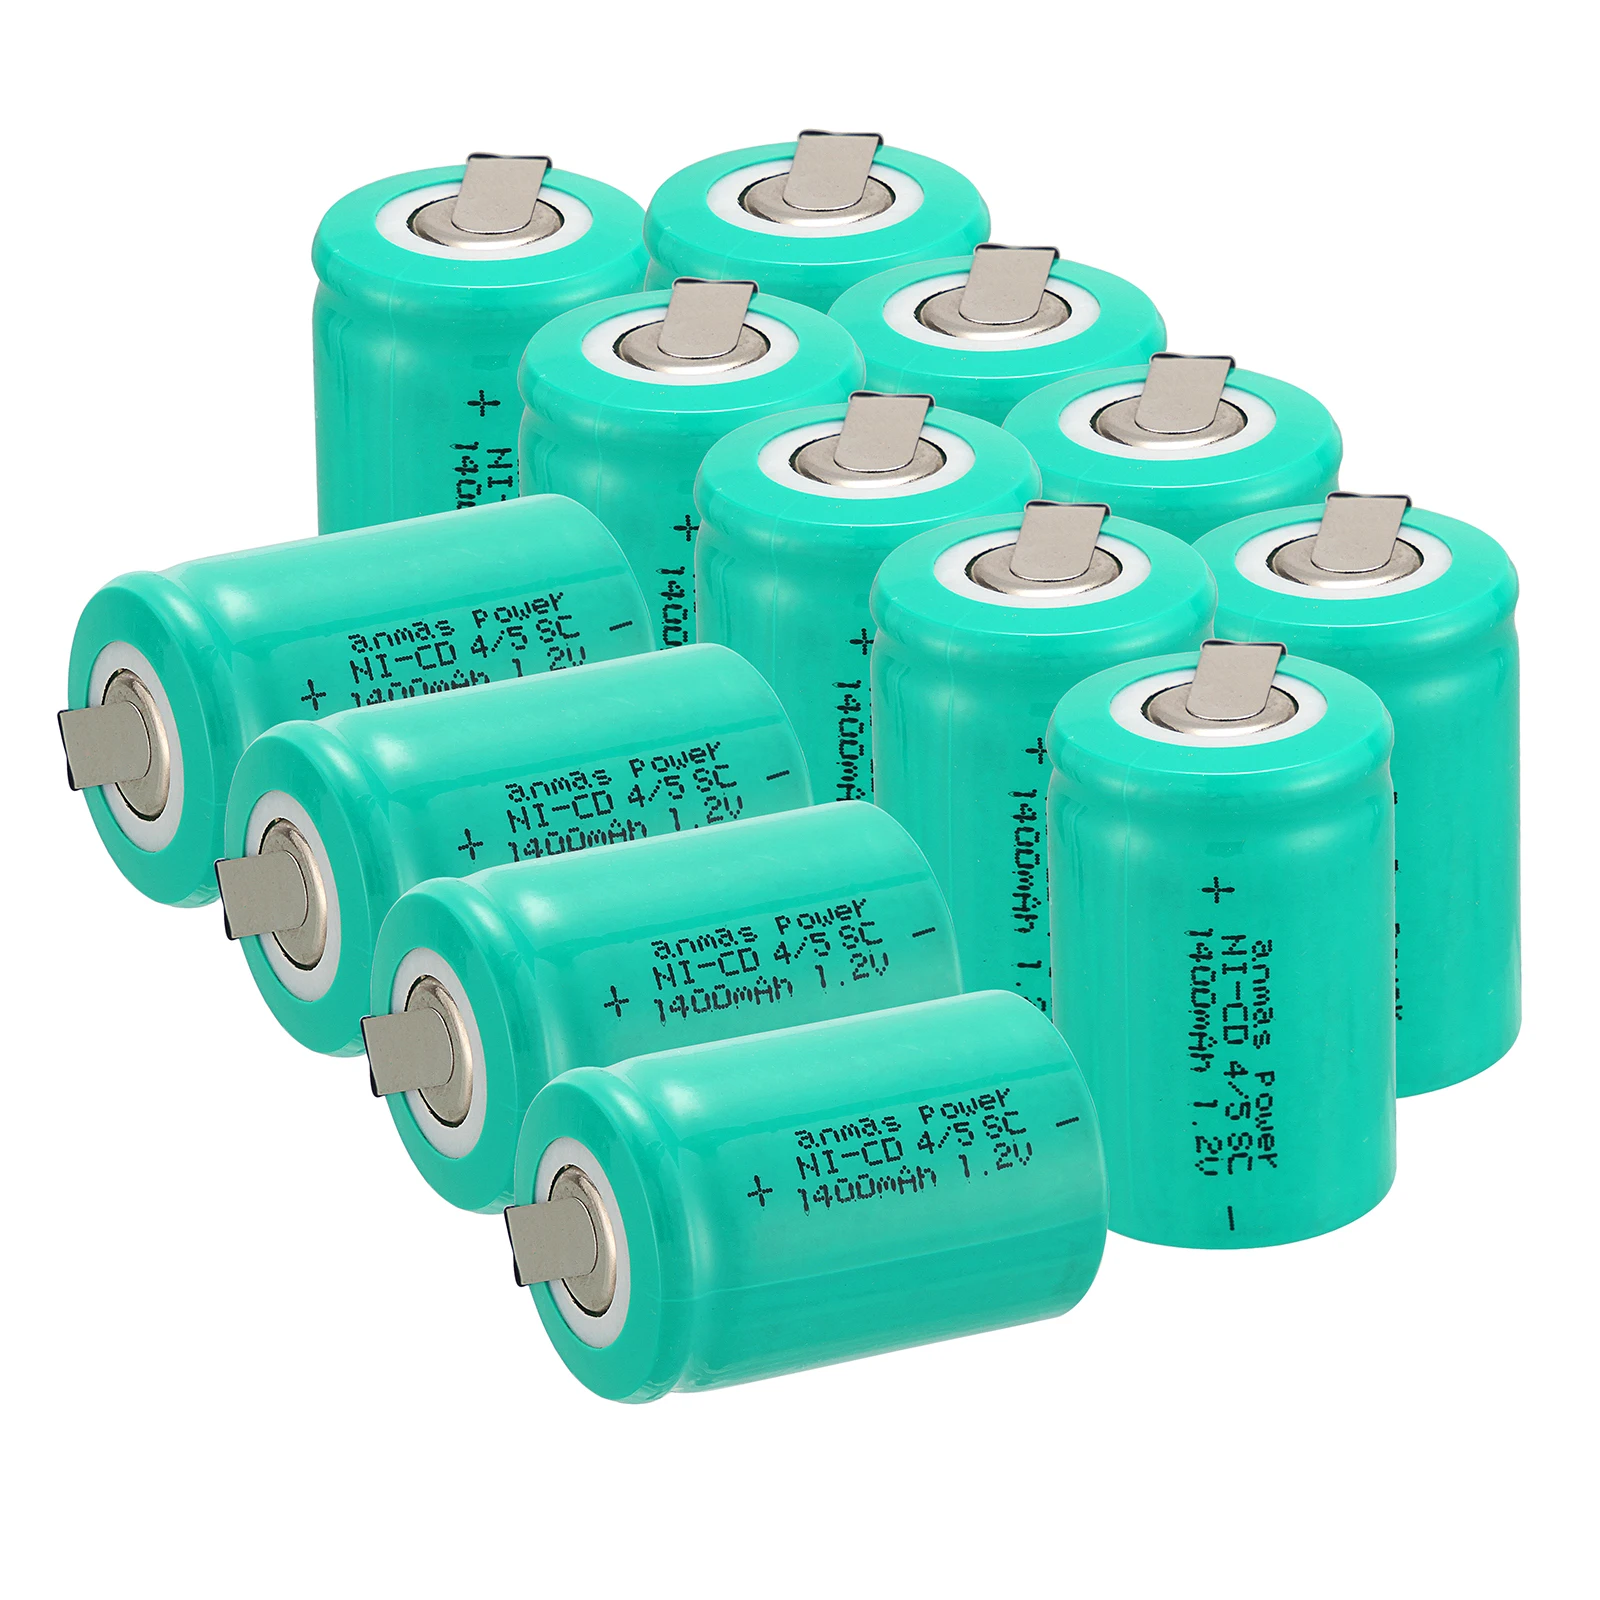 1400 мАч NICD 1,2 В батарея 1,2 в 4/5 SC Sub C Ni-CD Ni CD батареи аккумуляторные батареи с вкладкой зеленый 36 г 33 мм x 22 мм